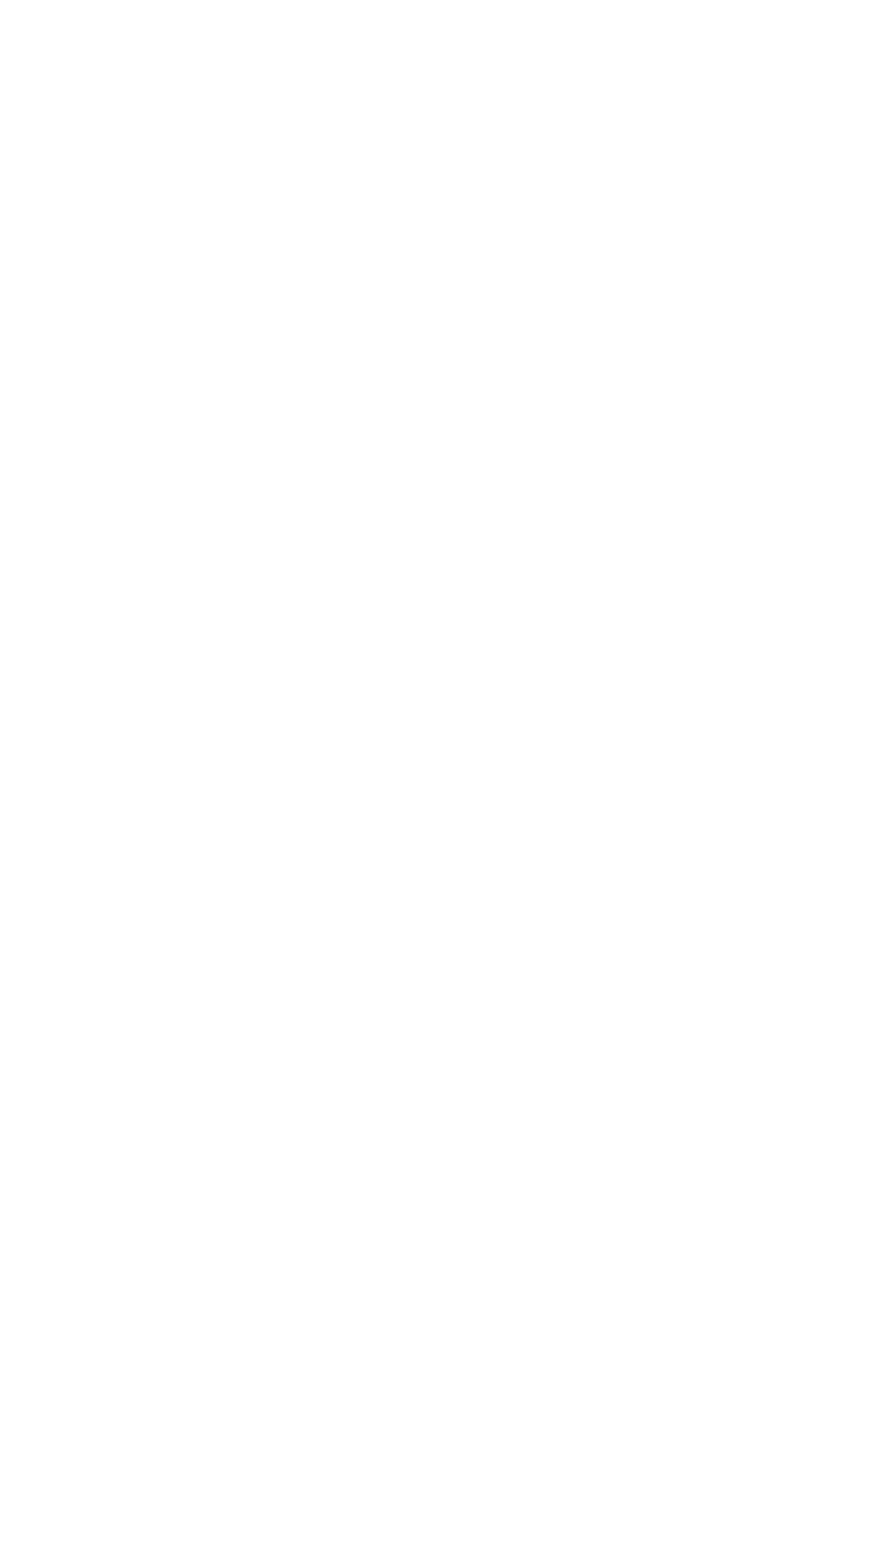 RLJ Lodging Trust logo pour fonds sombres (PNG transparent)